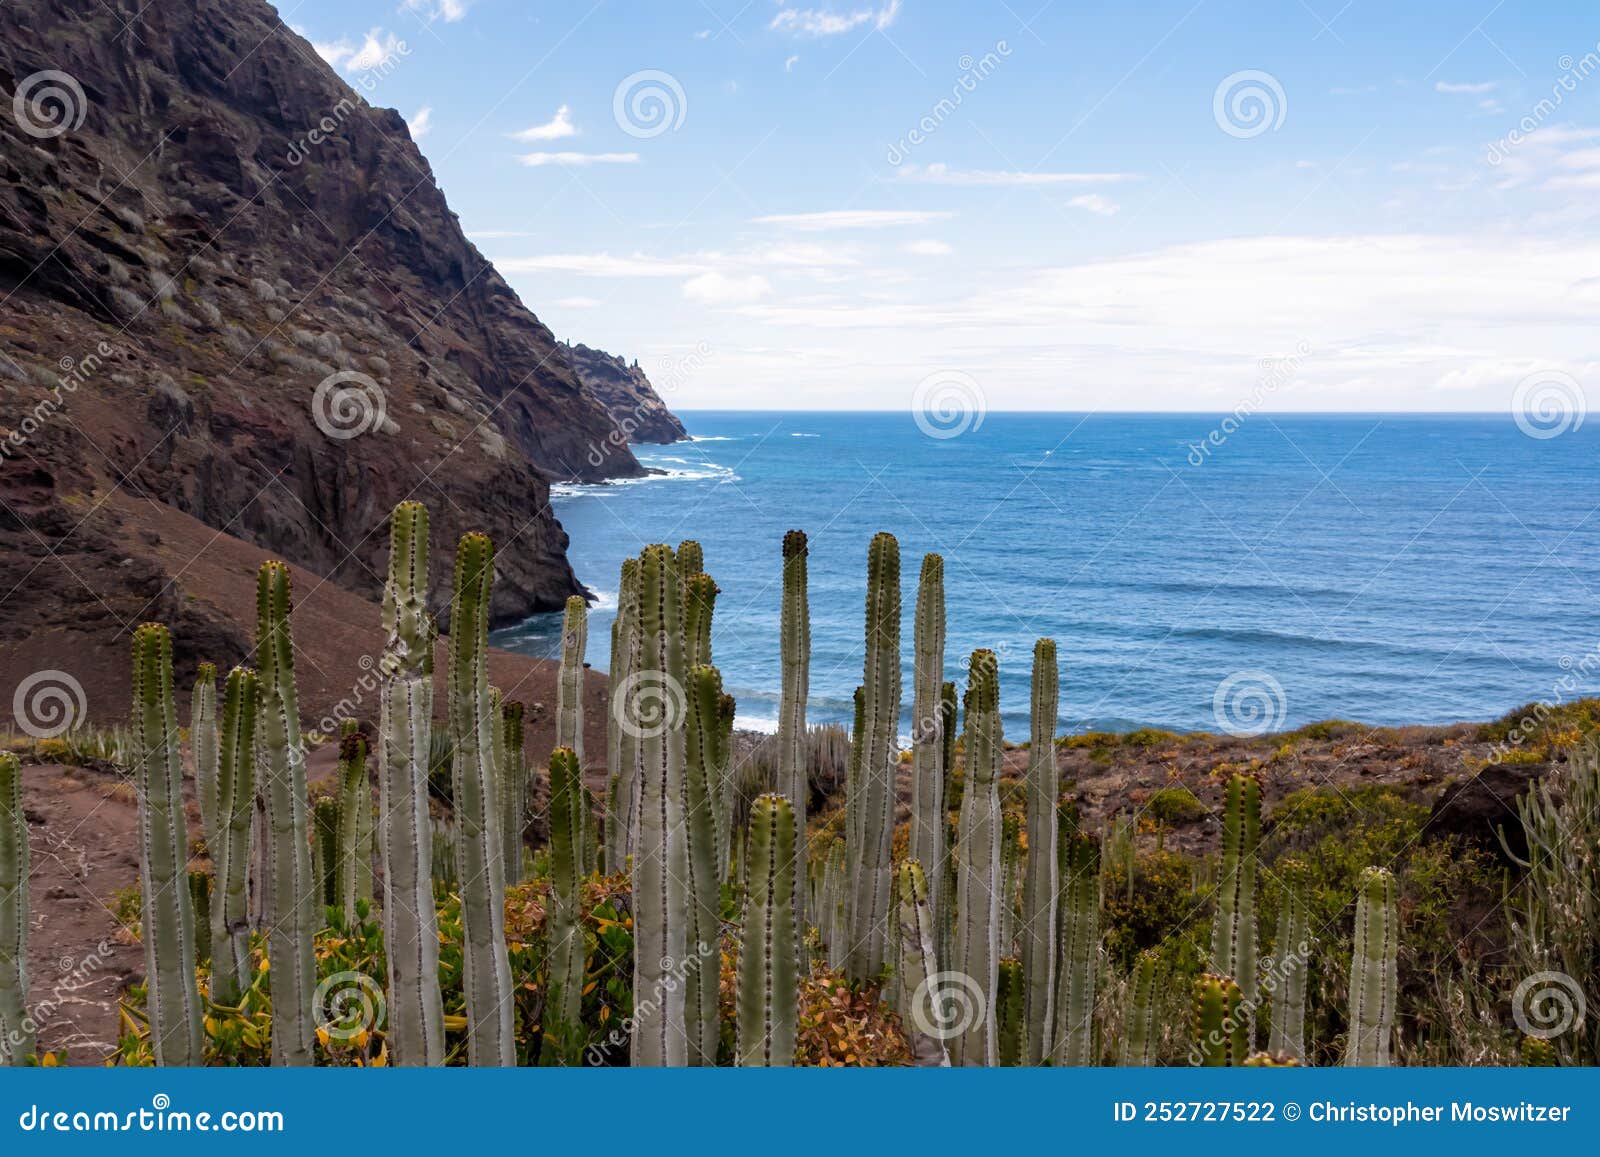 field of canary island spurge cactus. scenic view atlantic ocean coastline of anaga massif, tenerife, canary islands, spain